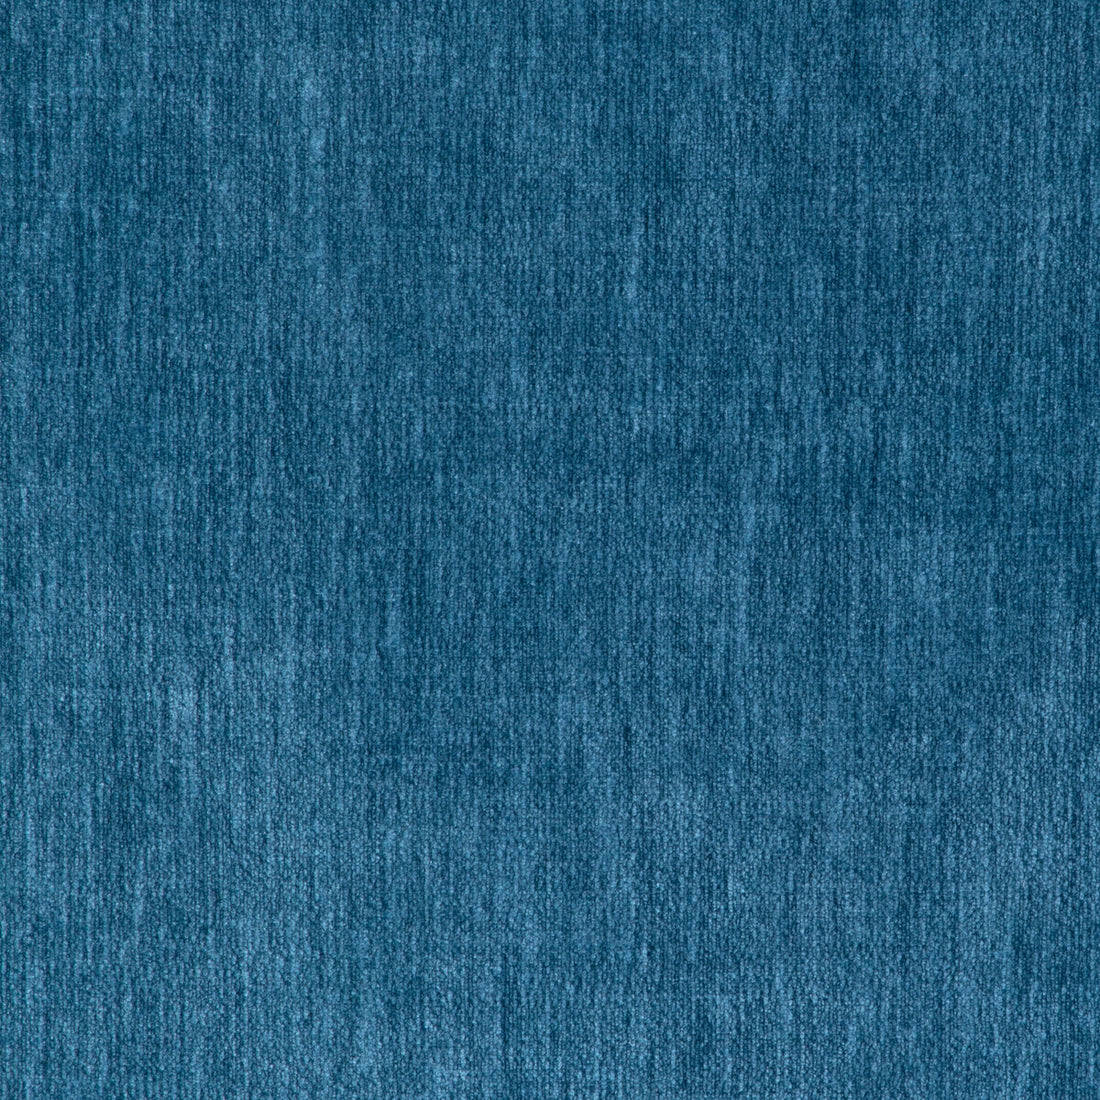 Kravet Smart fabric in 36676-5 color - pattern 36676.5.0 - by Kravet Smart in the Performance Kravetarmor collection